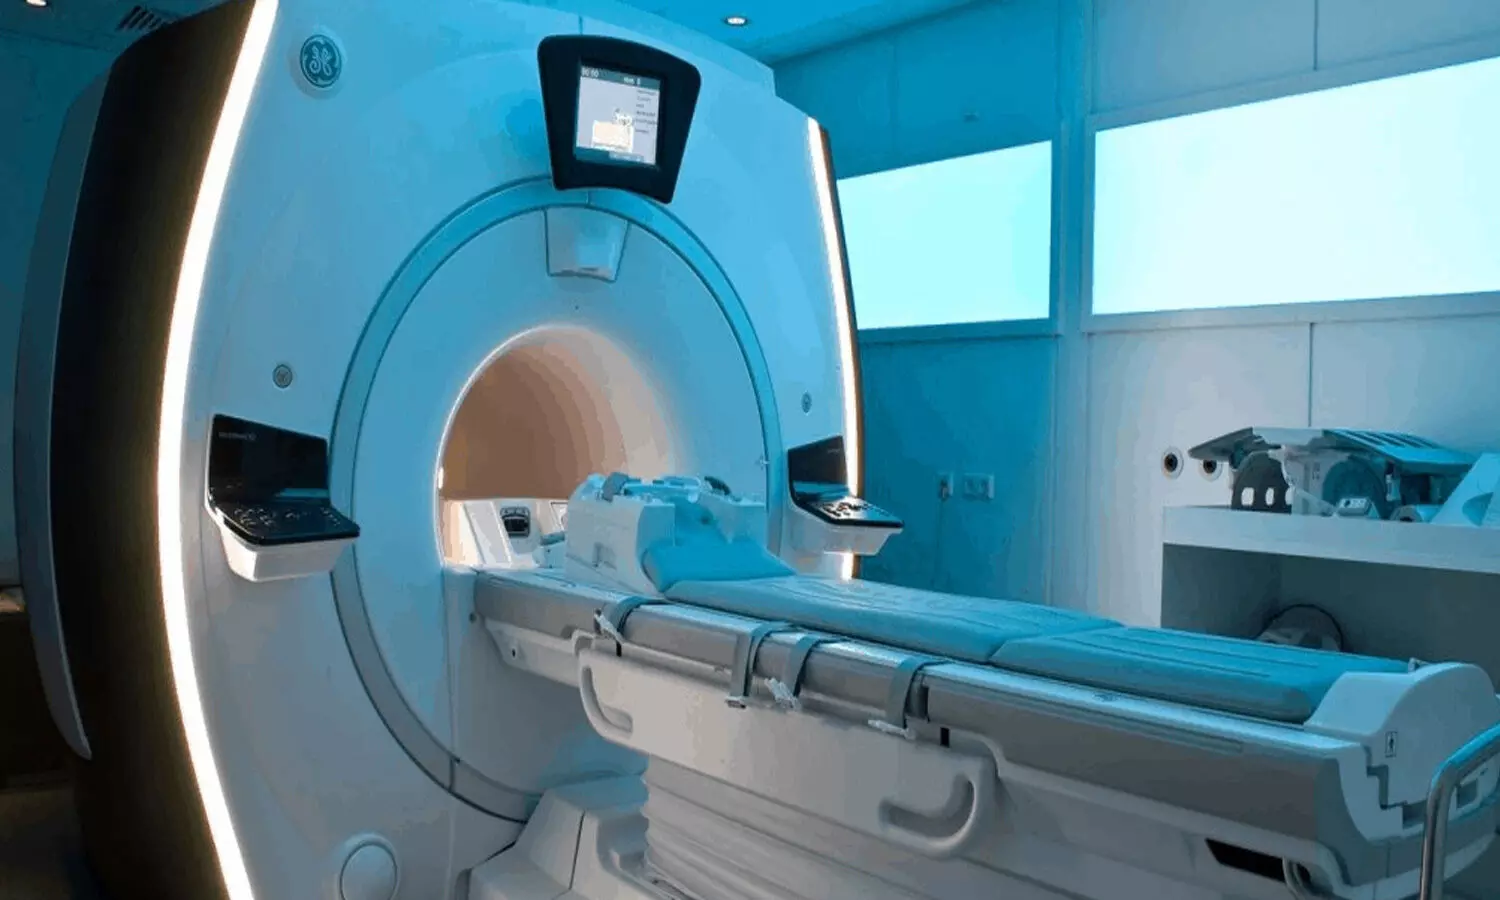 Good or Bad: CT has decreased but pediatric advanced imaging has increased